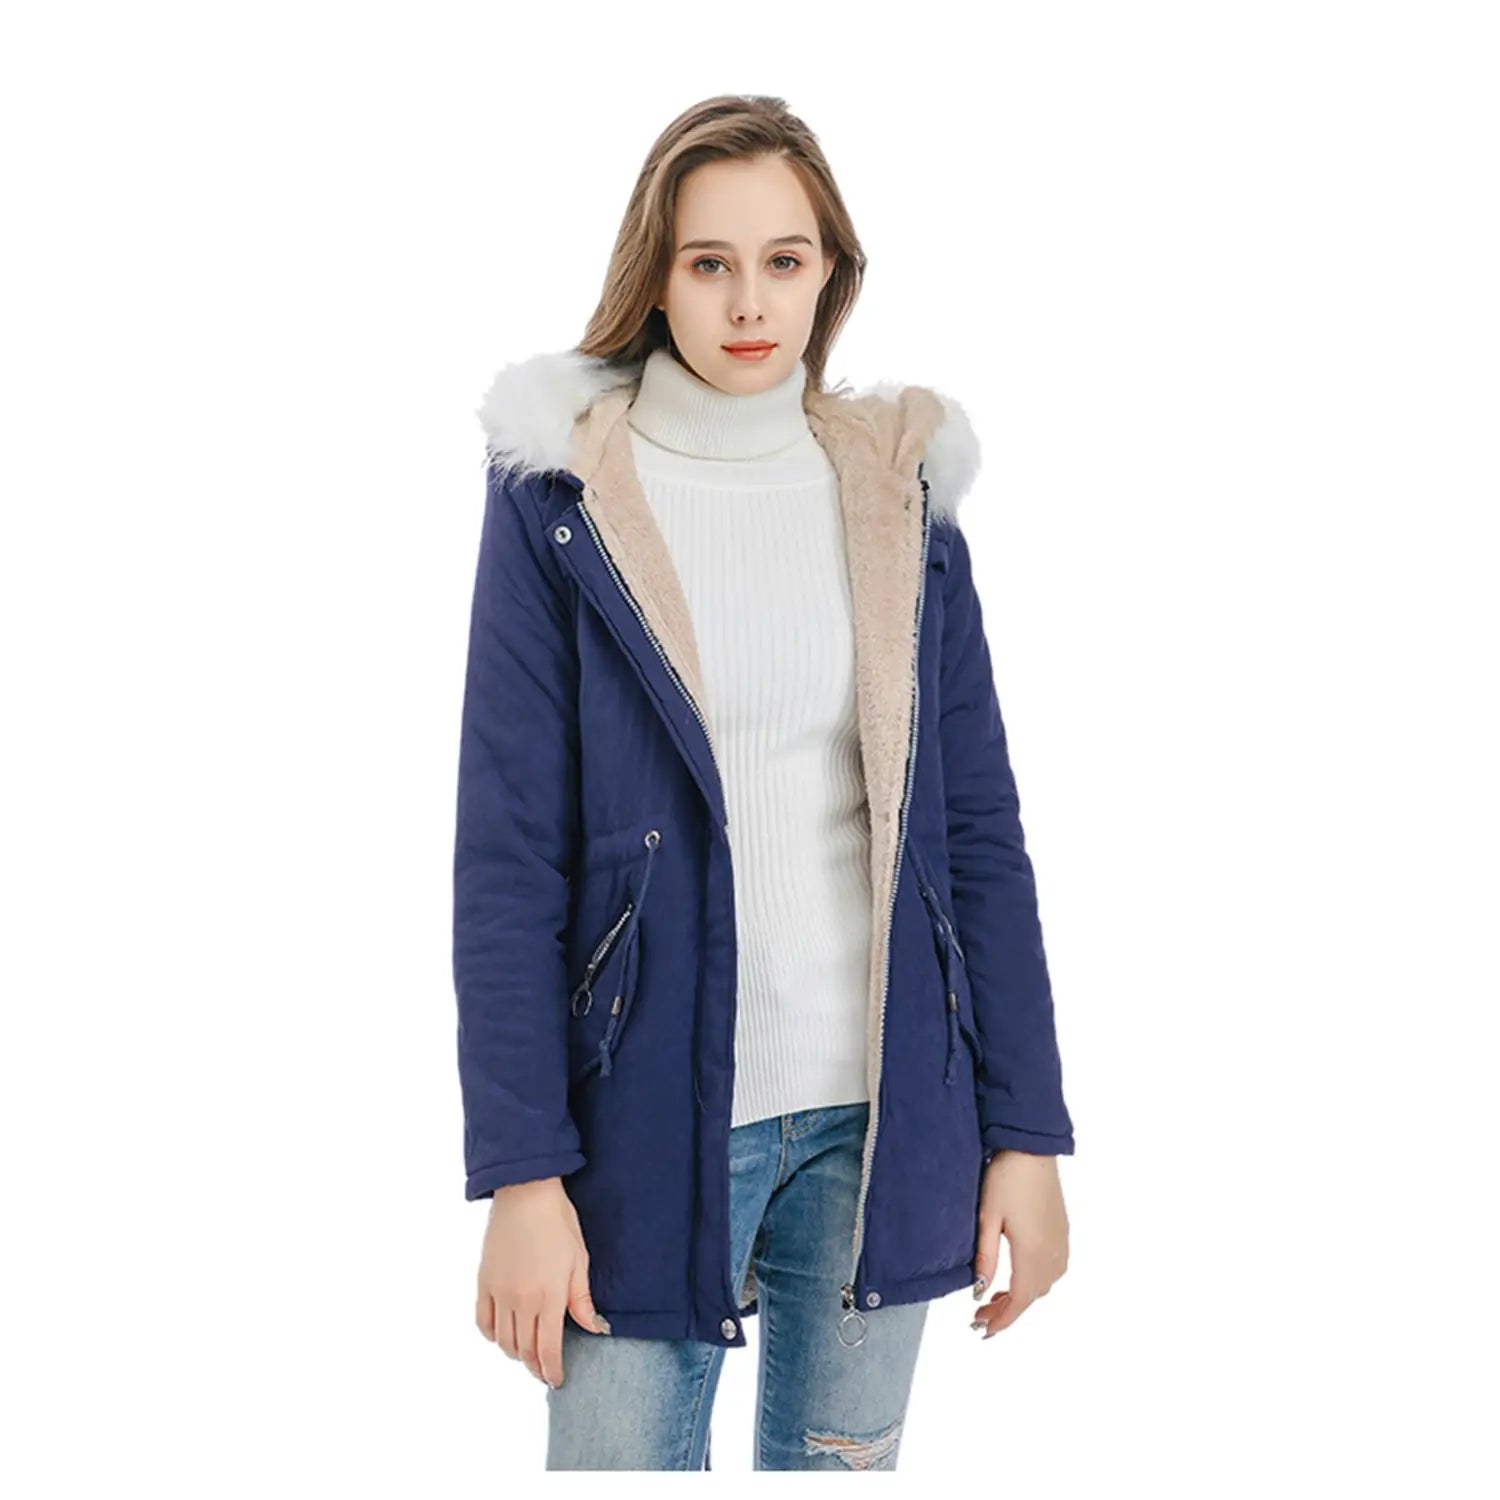 Lovemi - Medium length coat with large fur collar